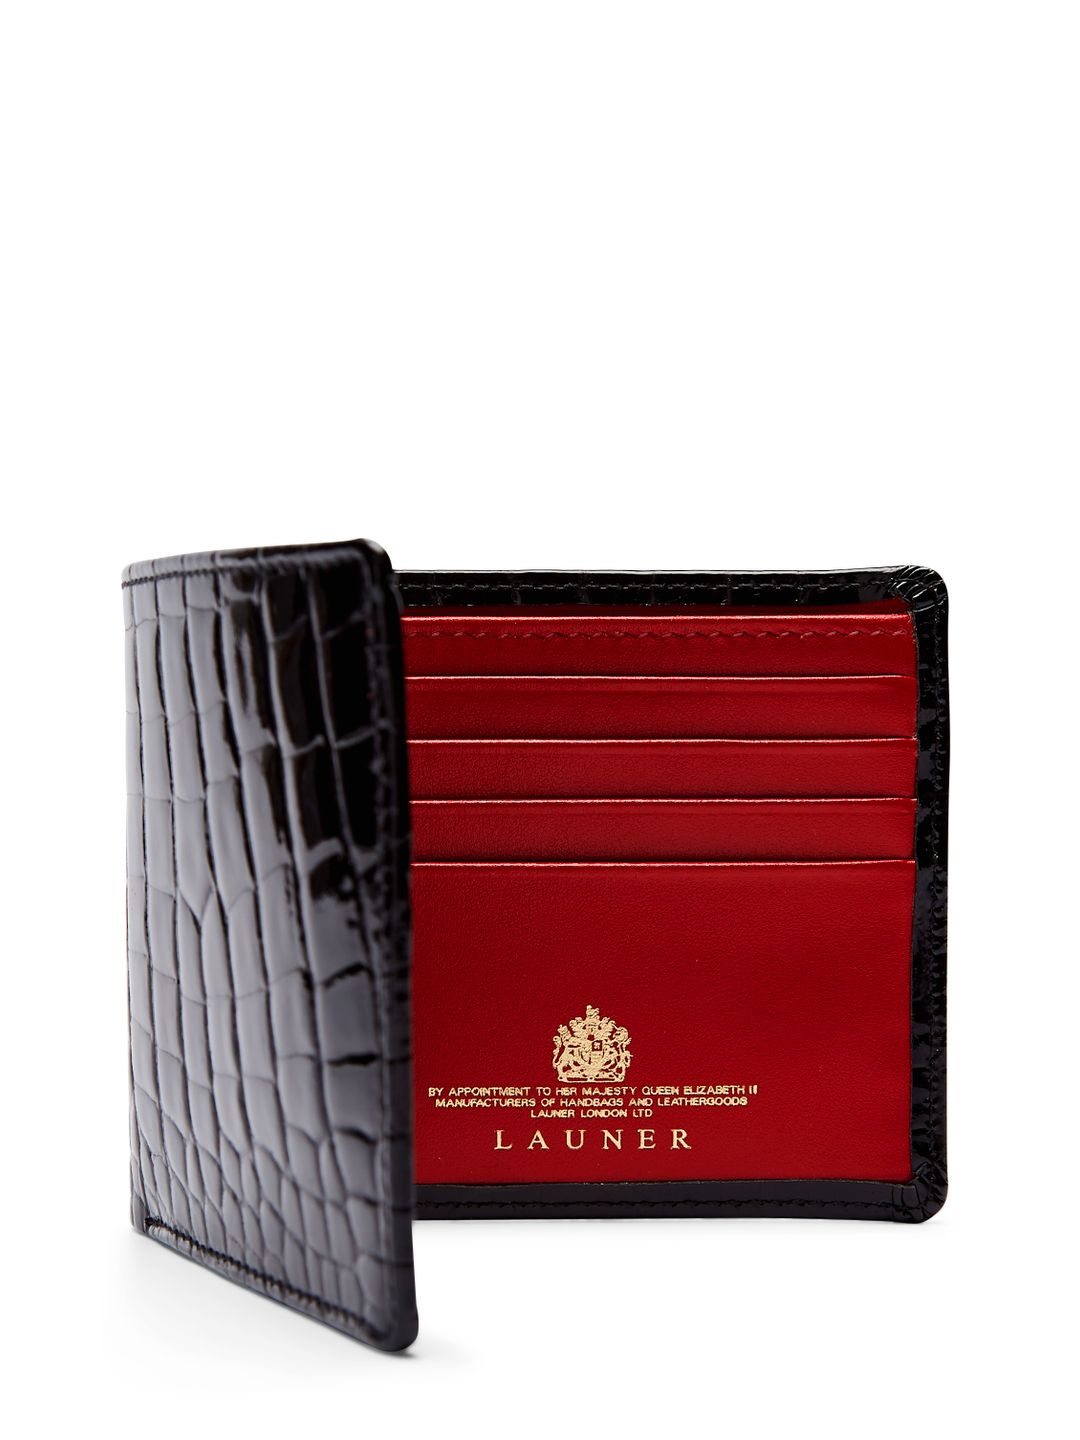 Coronation Wallet - Launer